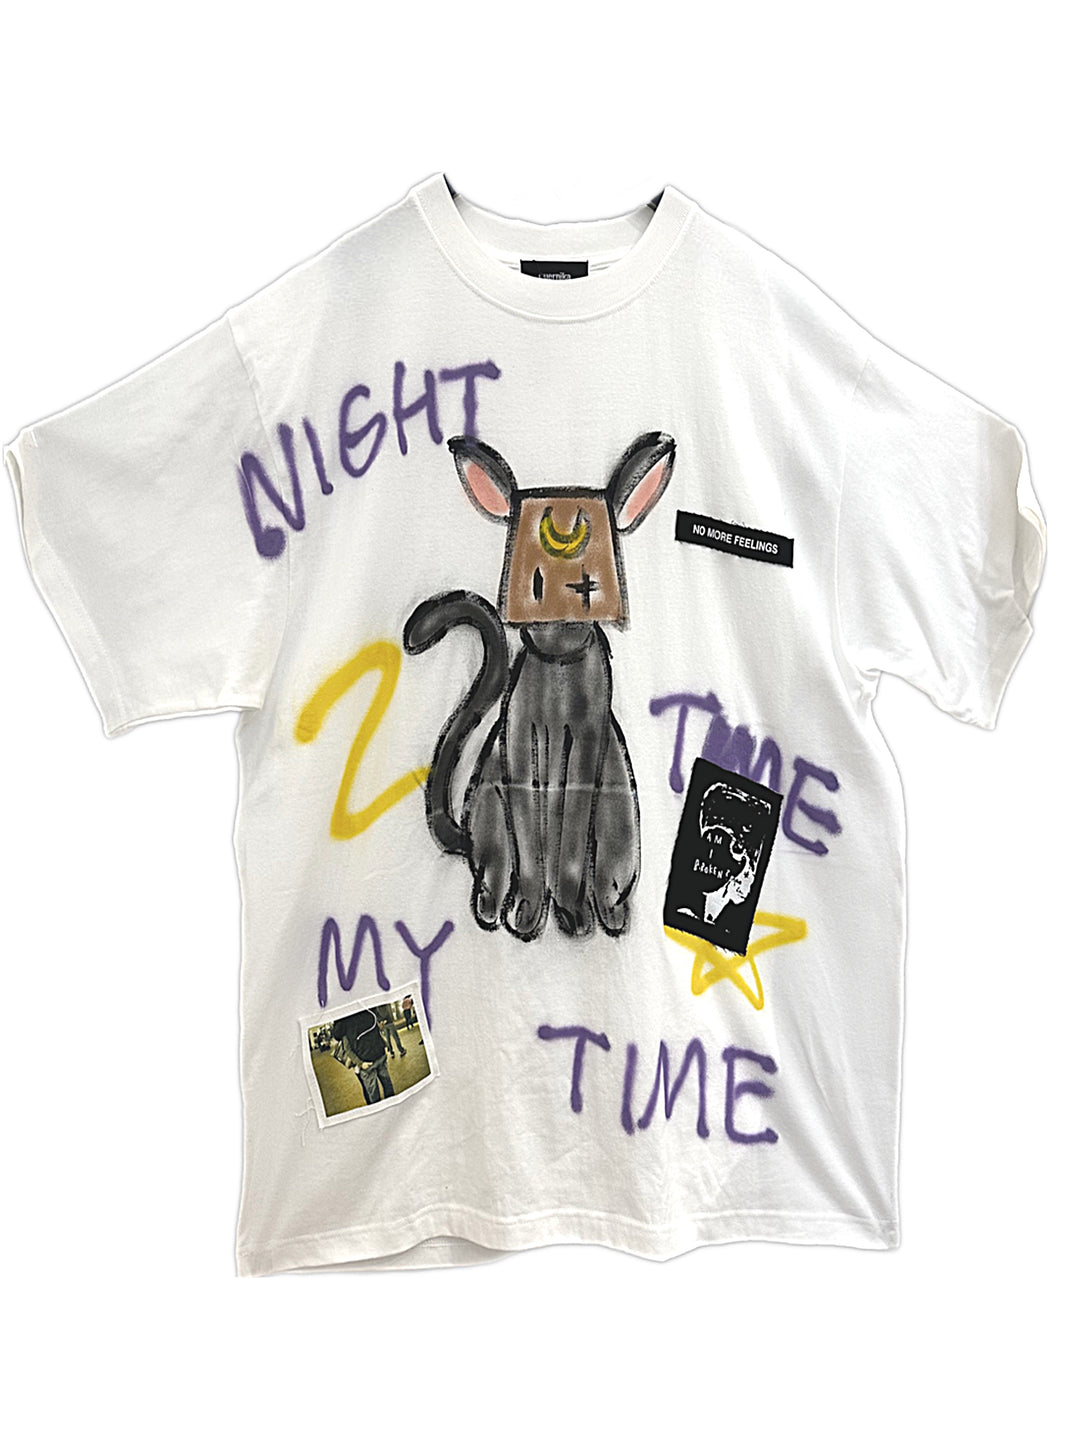 3NY - Guernika Luna Night Time My Time T-Shirt